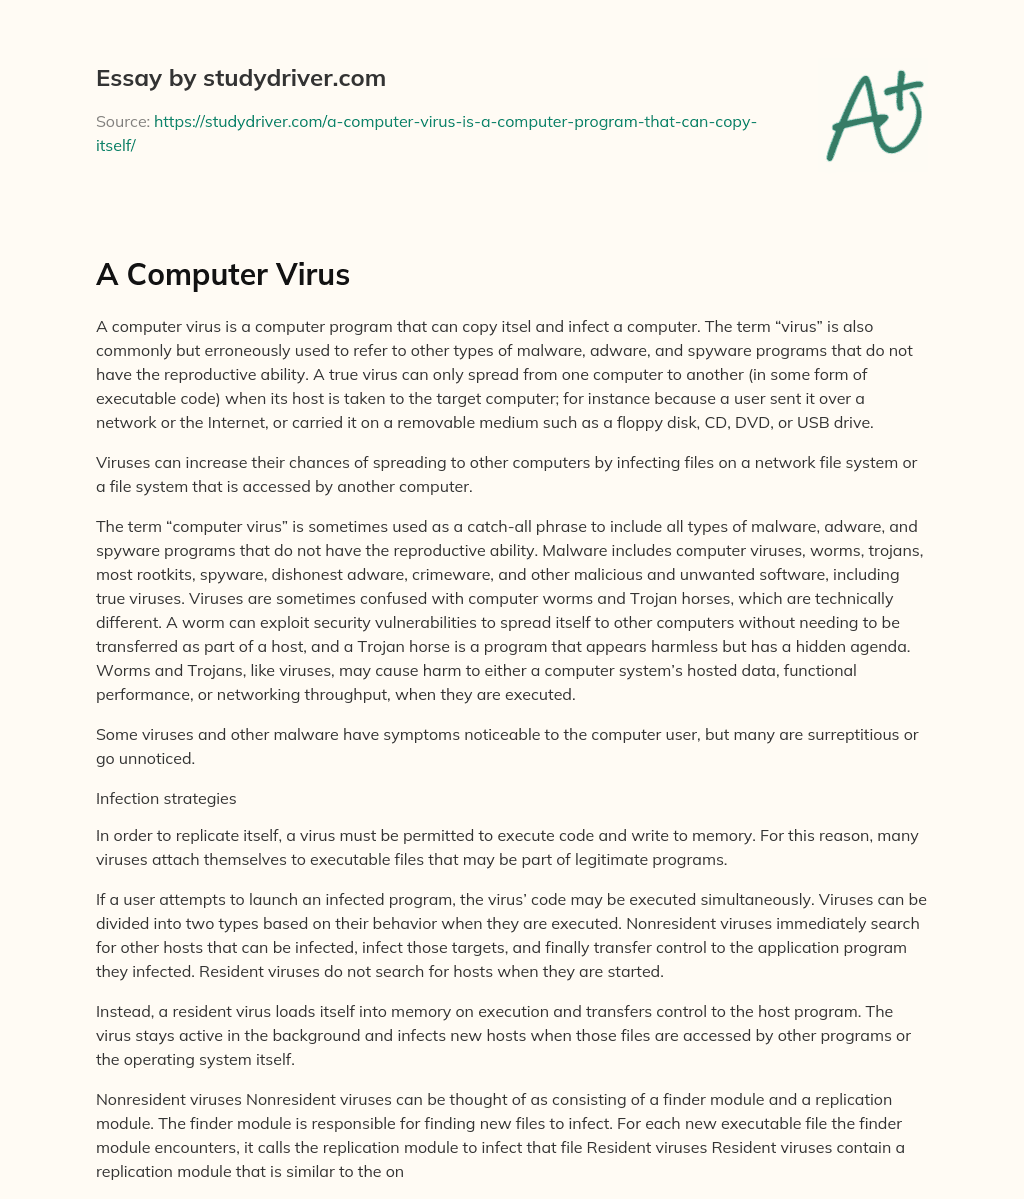 A Computer Virus essay